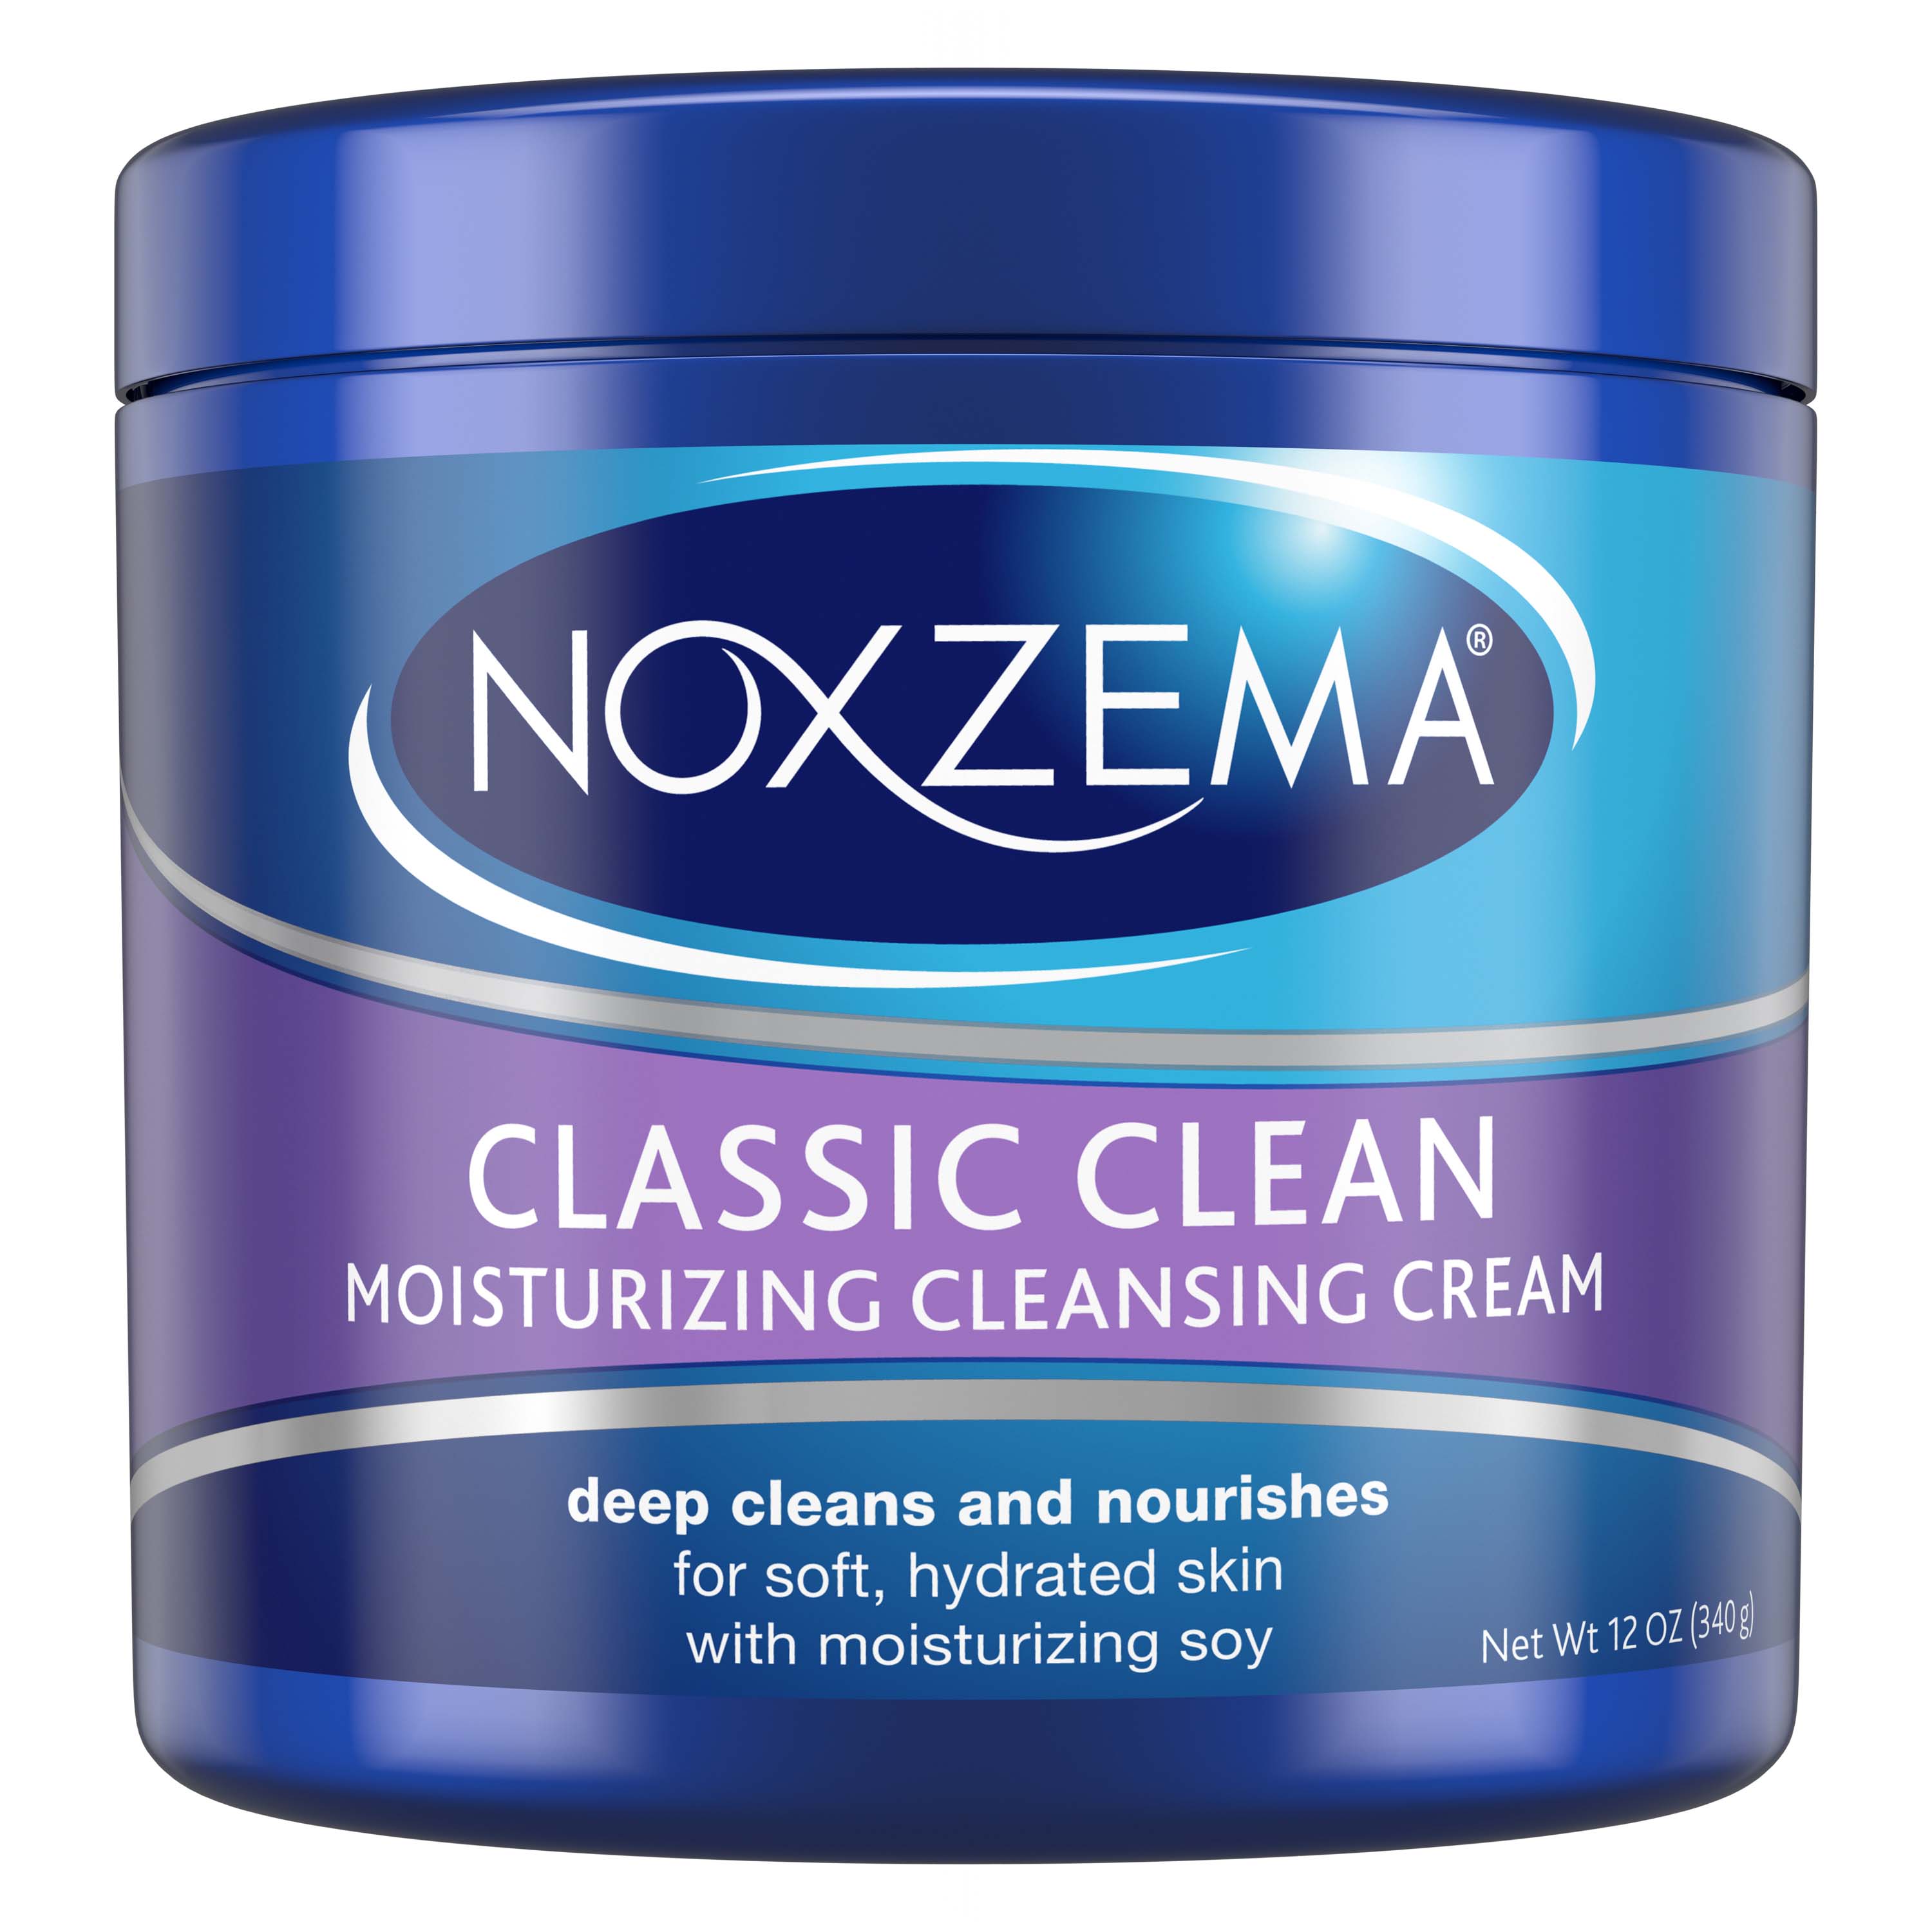 Noxzema Classic Clean, Moisturizing Cleansing Cream 12 oz - image 1 of 10